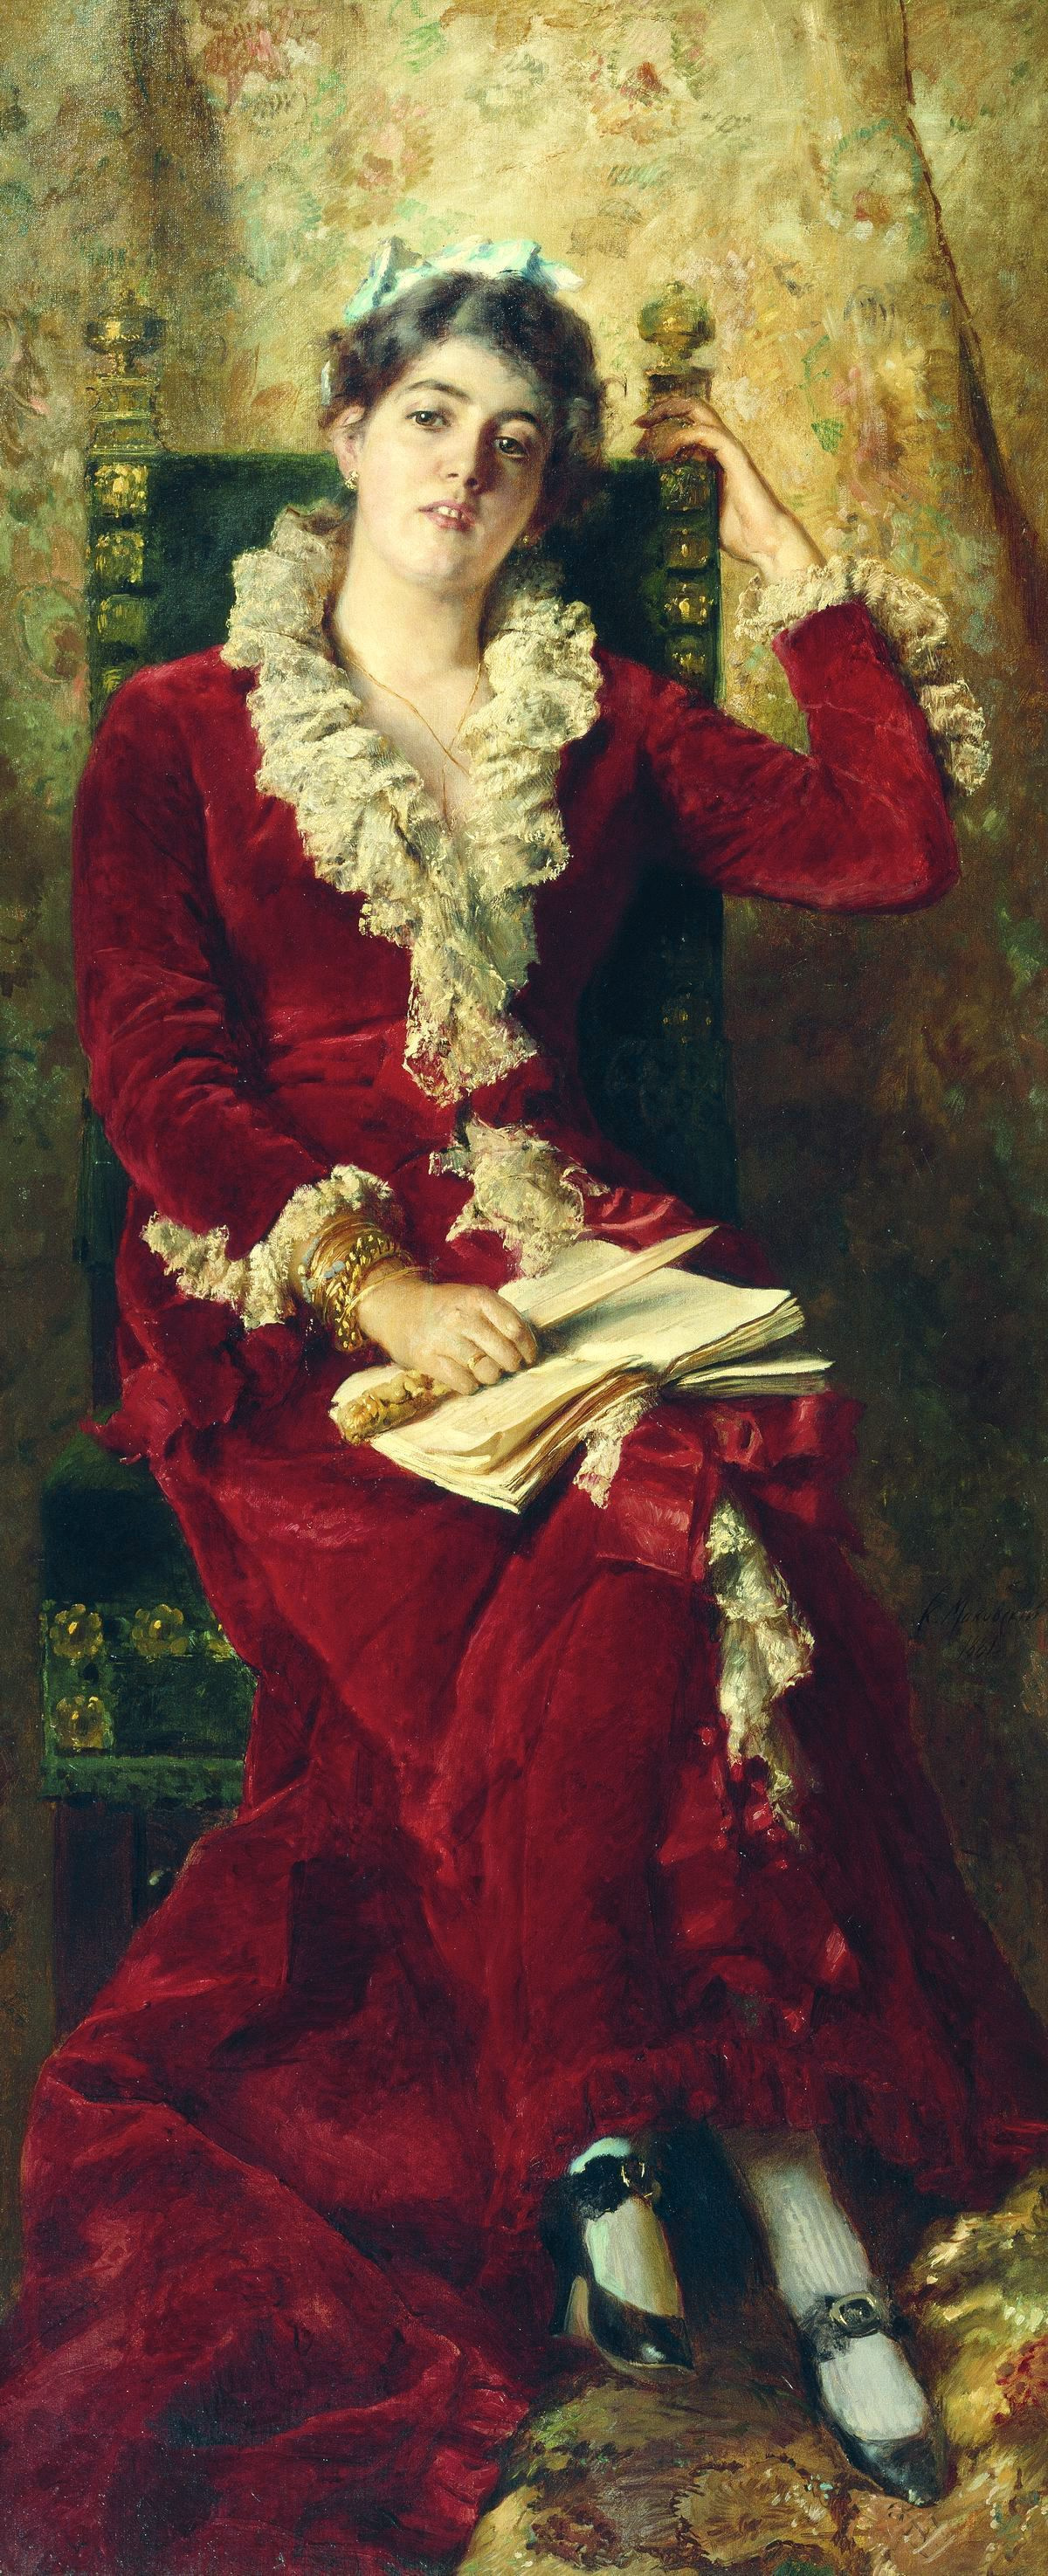 Konstantin Makovsky. Portrait of the artist's wife, Yulia Pavlovna Makovskaya